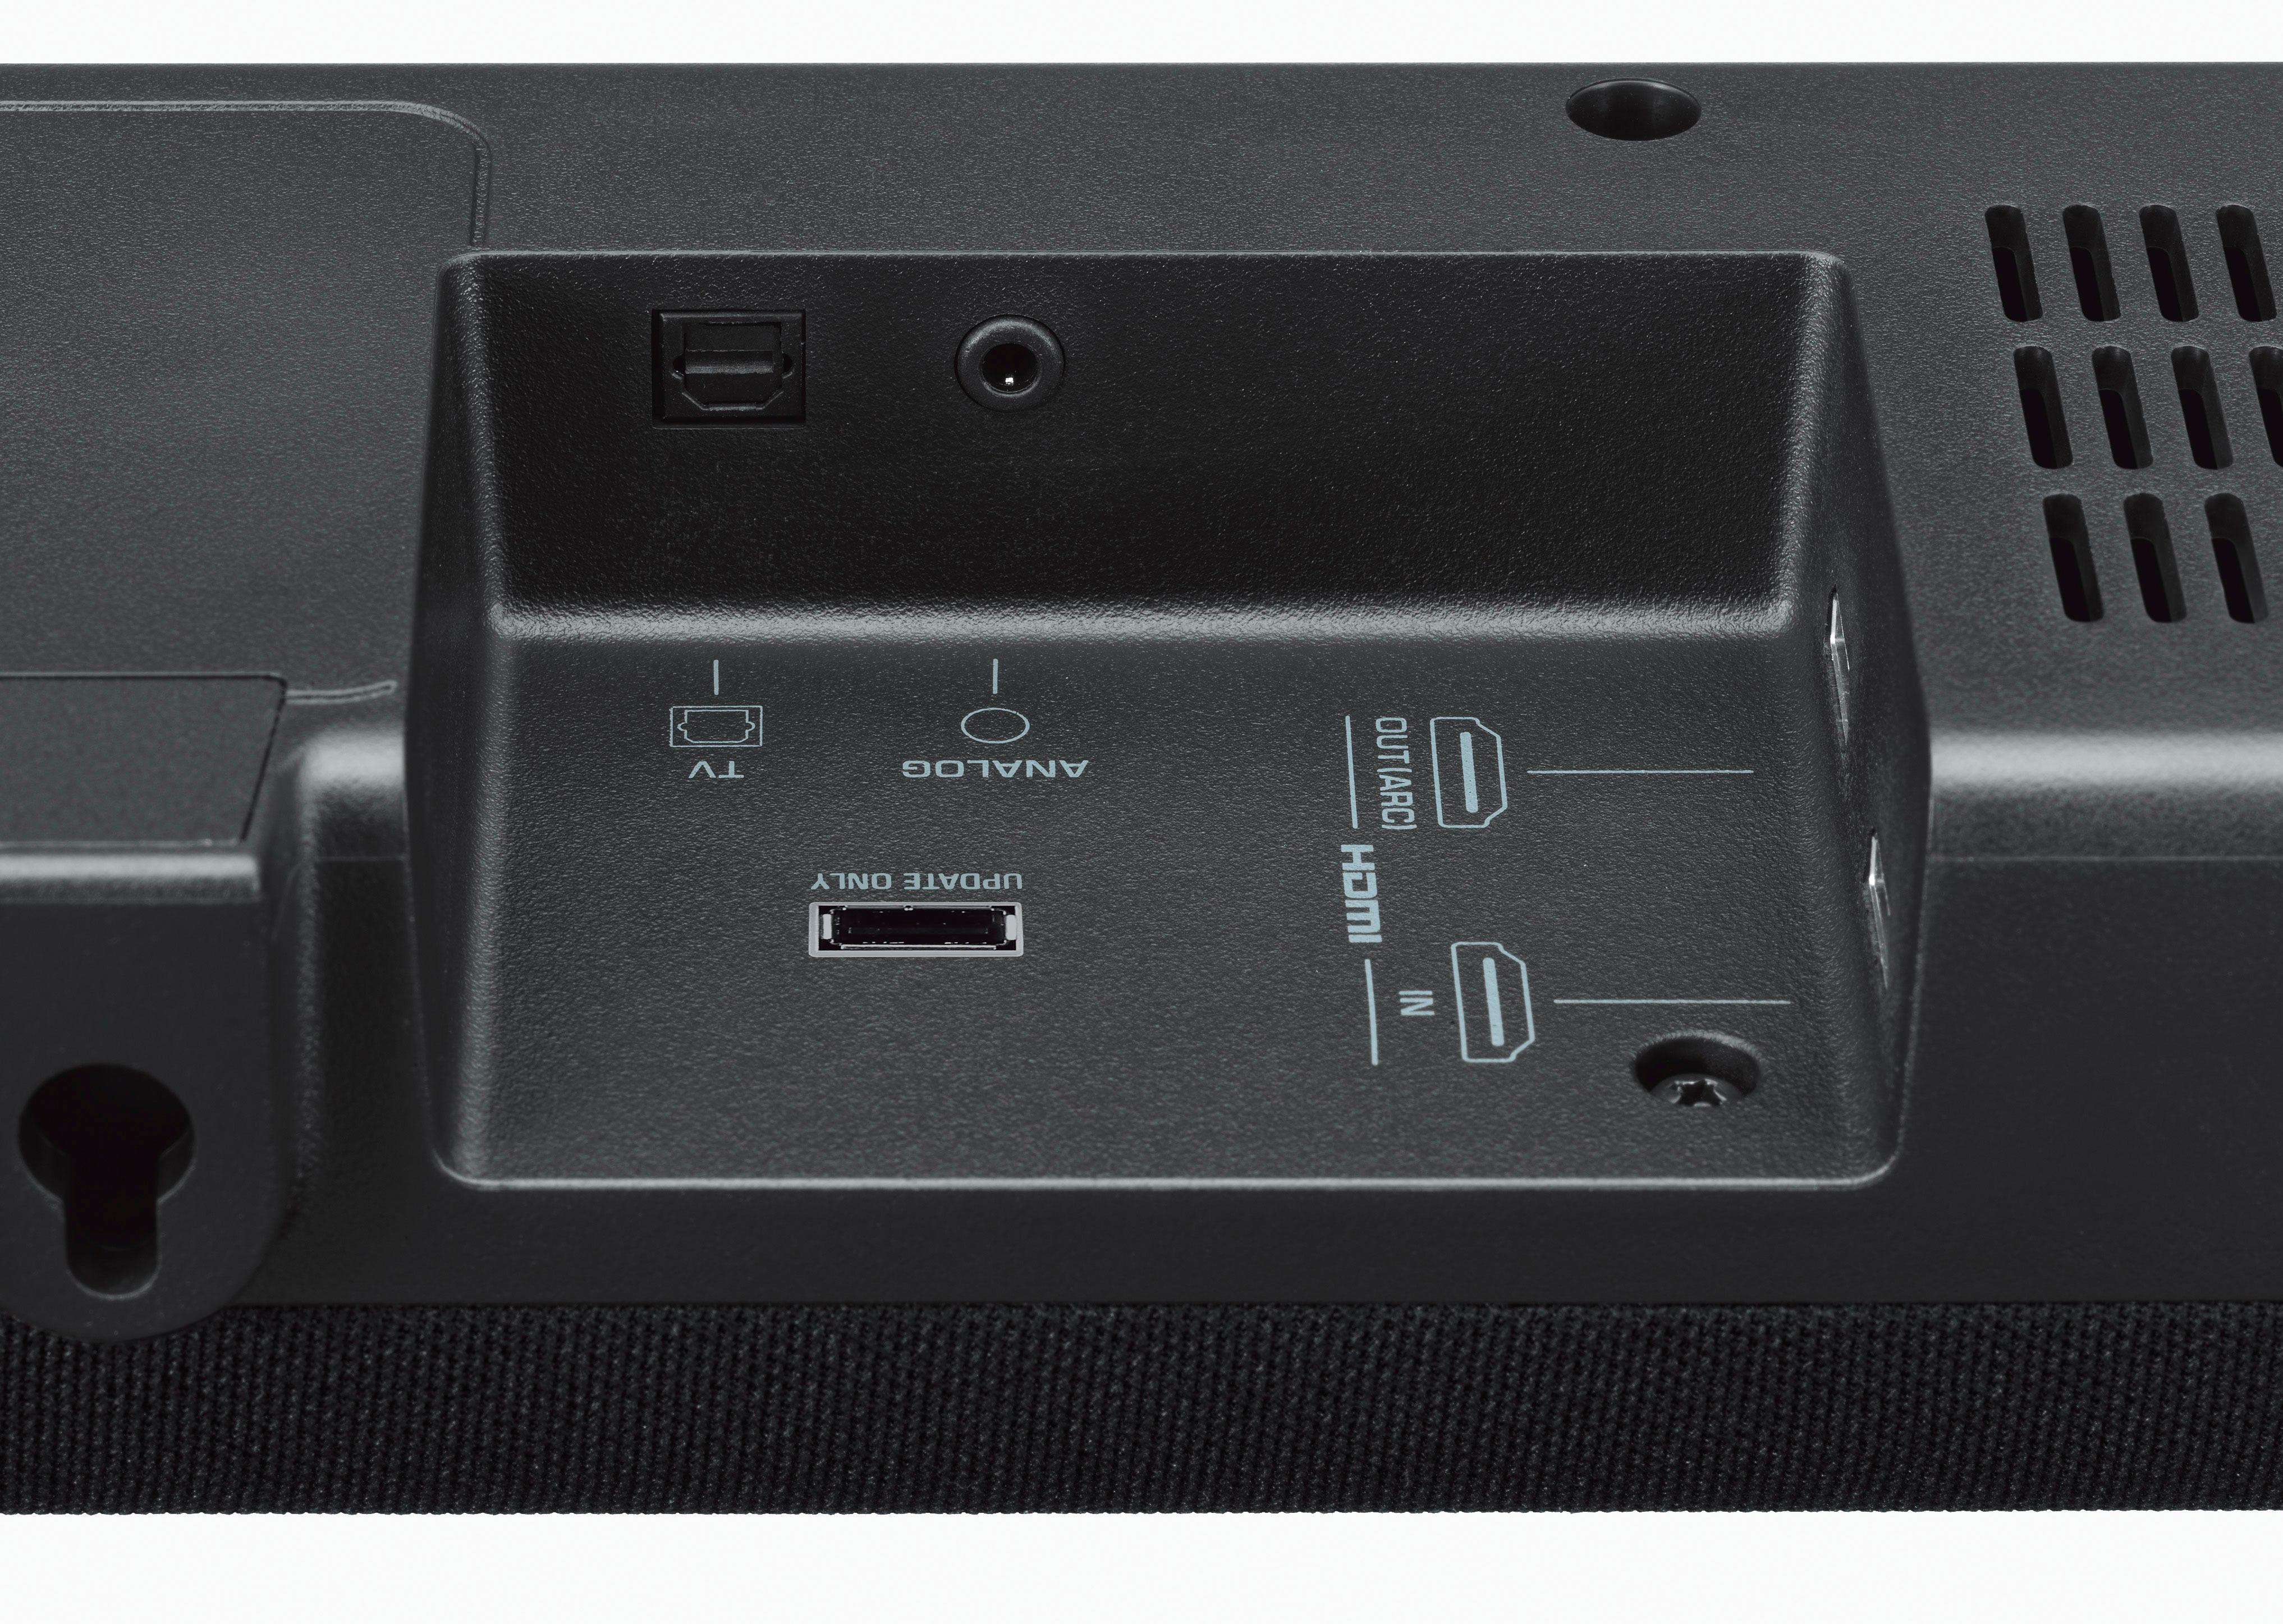 Renewed Yamaha YAS-207BL Sound Bar with Wireless Subwoofer Bluetooth & DTS Virtual Black